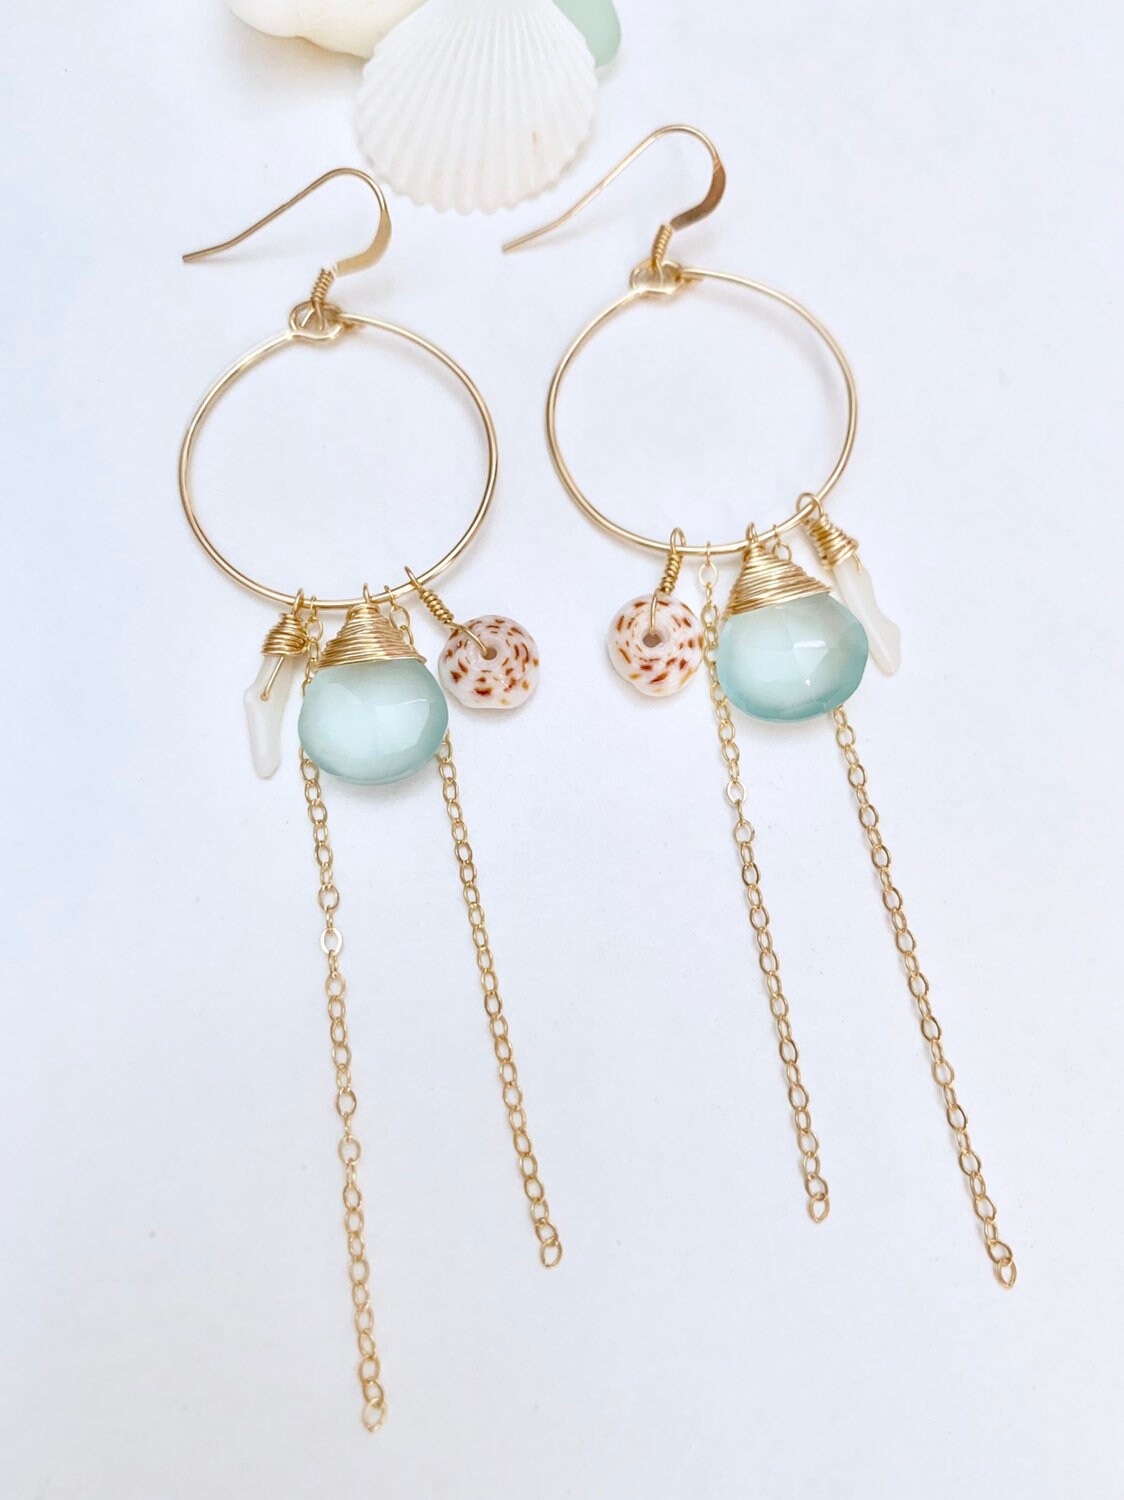 Pearl Earrings Gold Aqua Earrings Aqua Blue Chalcedony Beach Earrings Gemstones Hawaii Jewelry